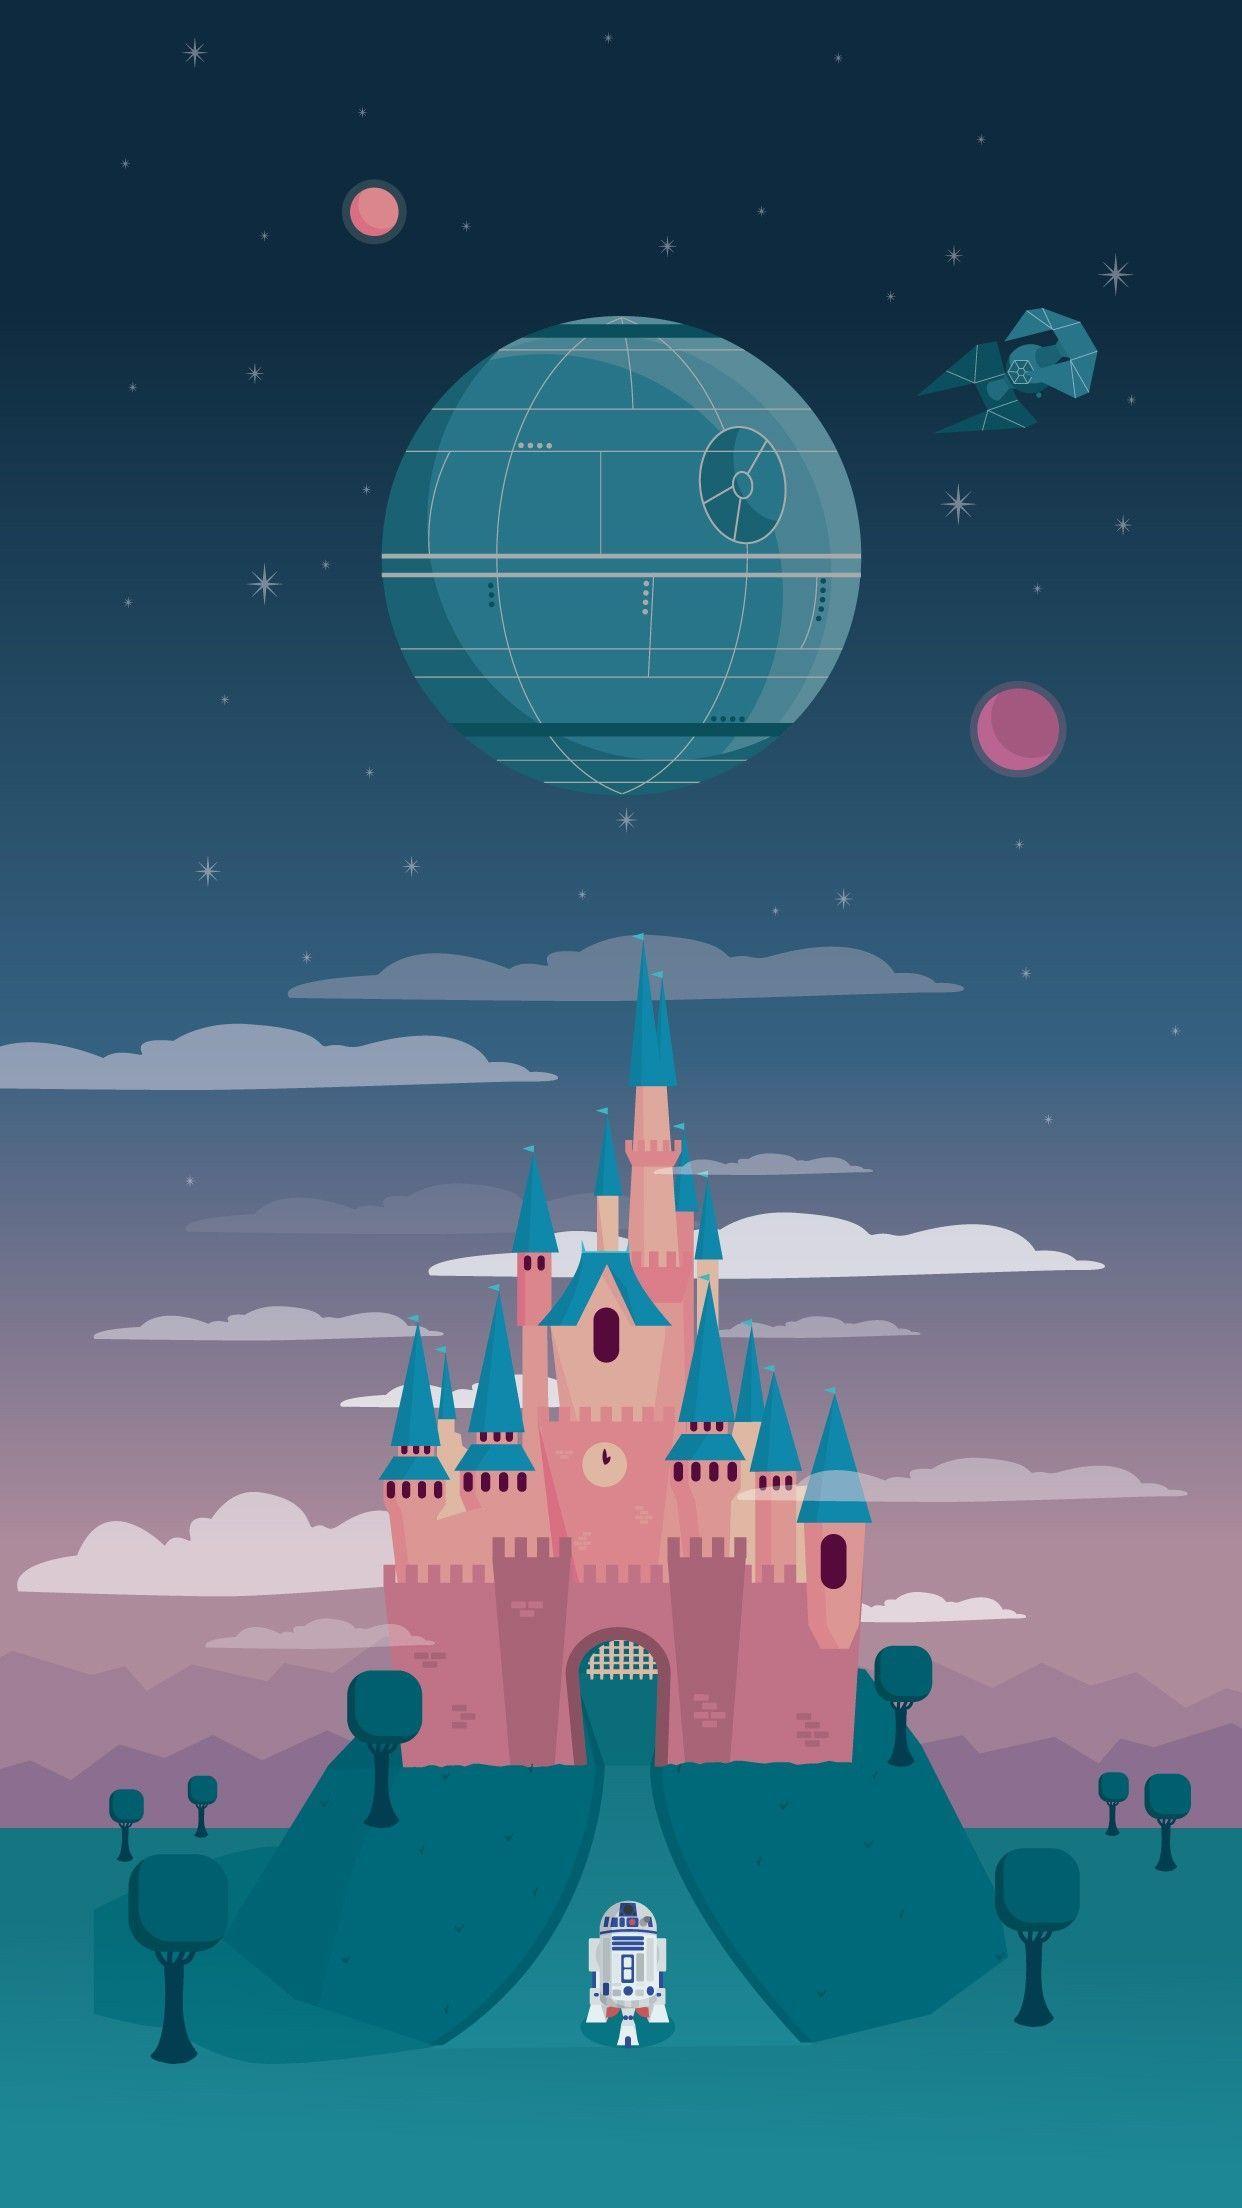 Disney Wallpaper